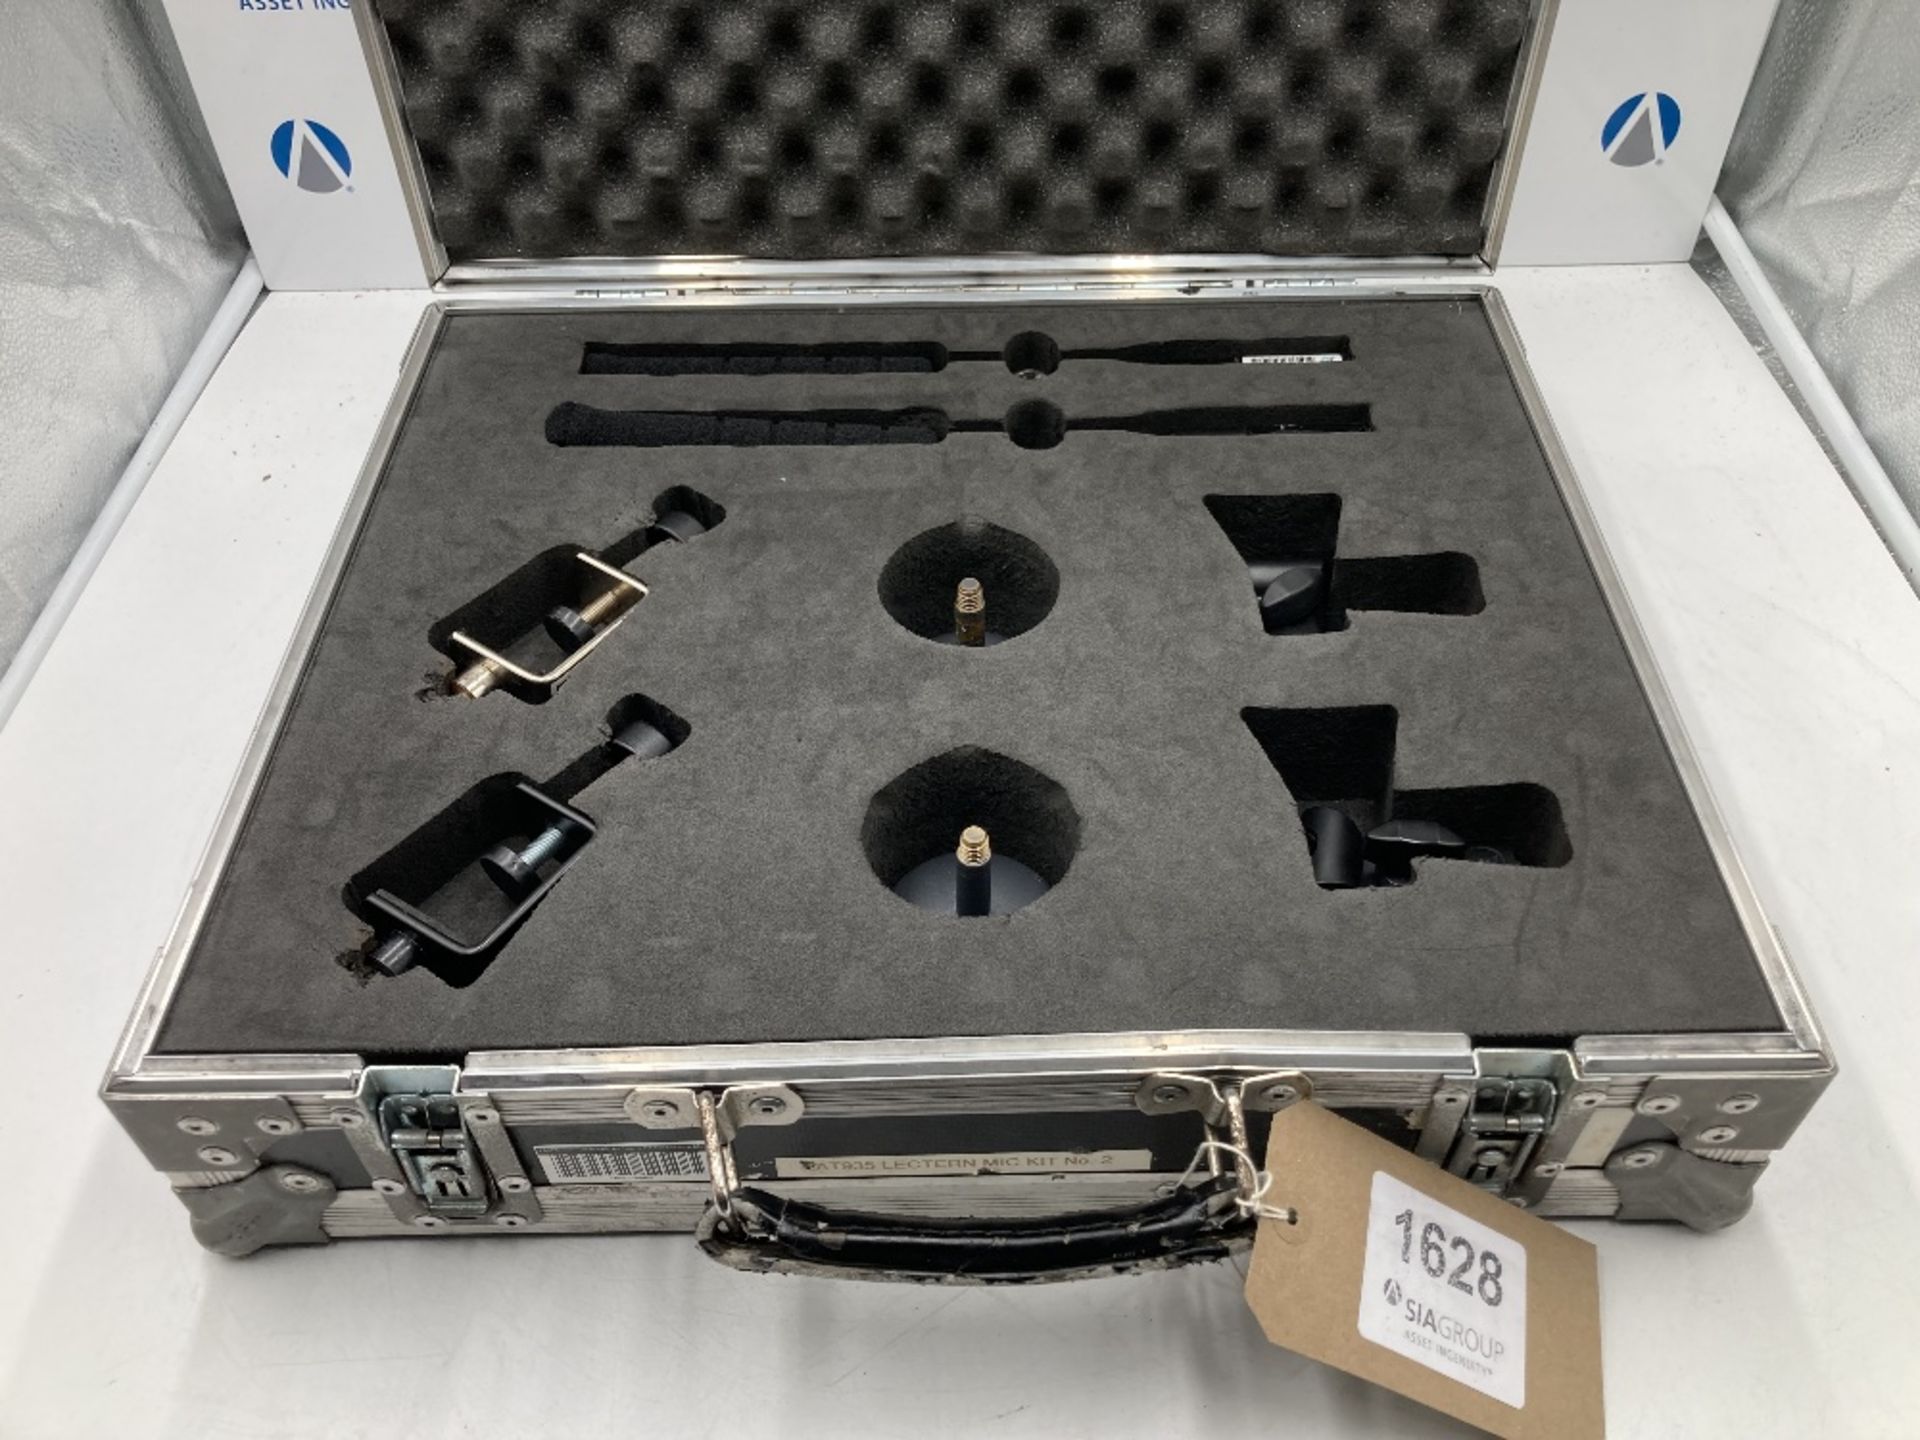 Audio Technica AT935 Kit & Heavy Duty Case - Image 2 of 6